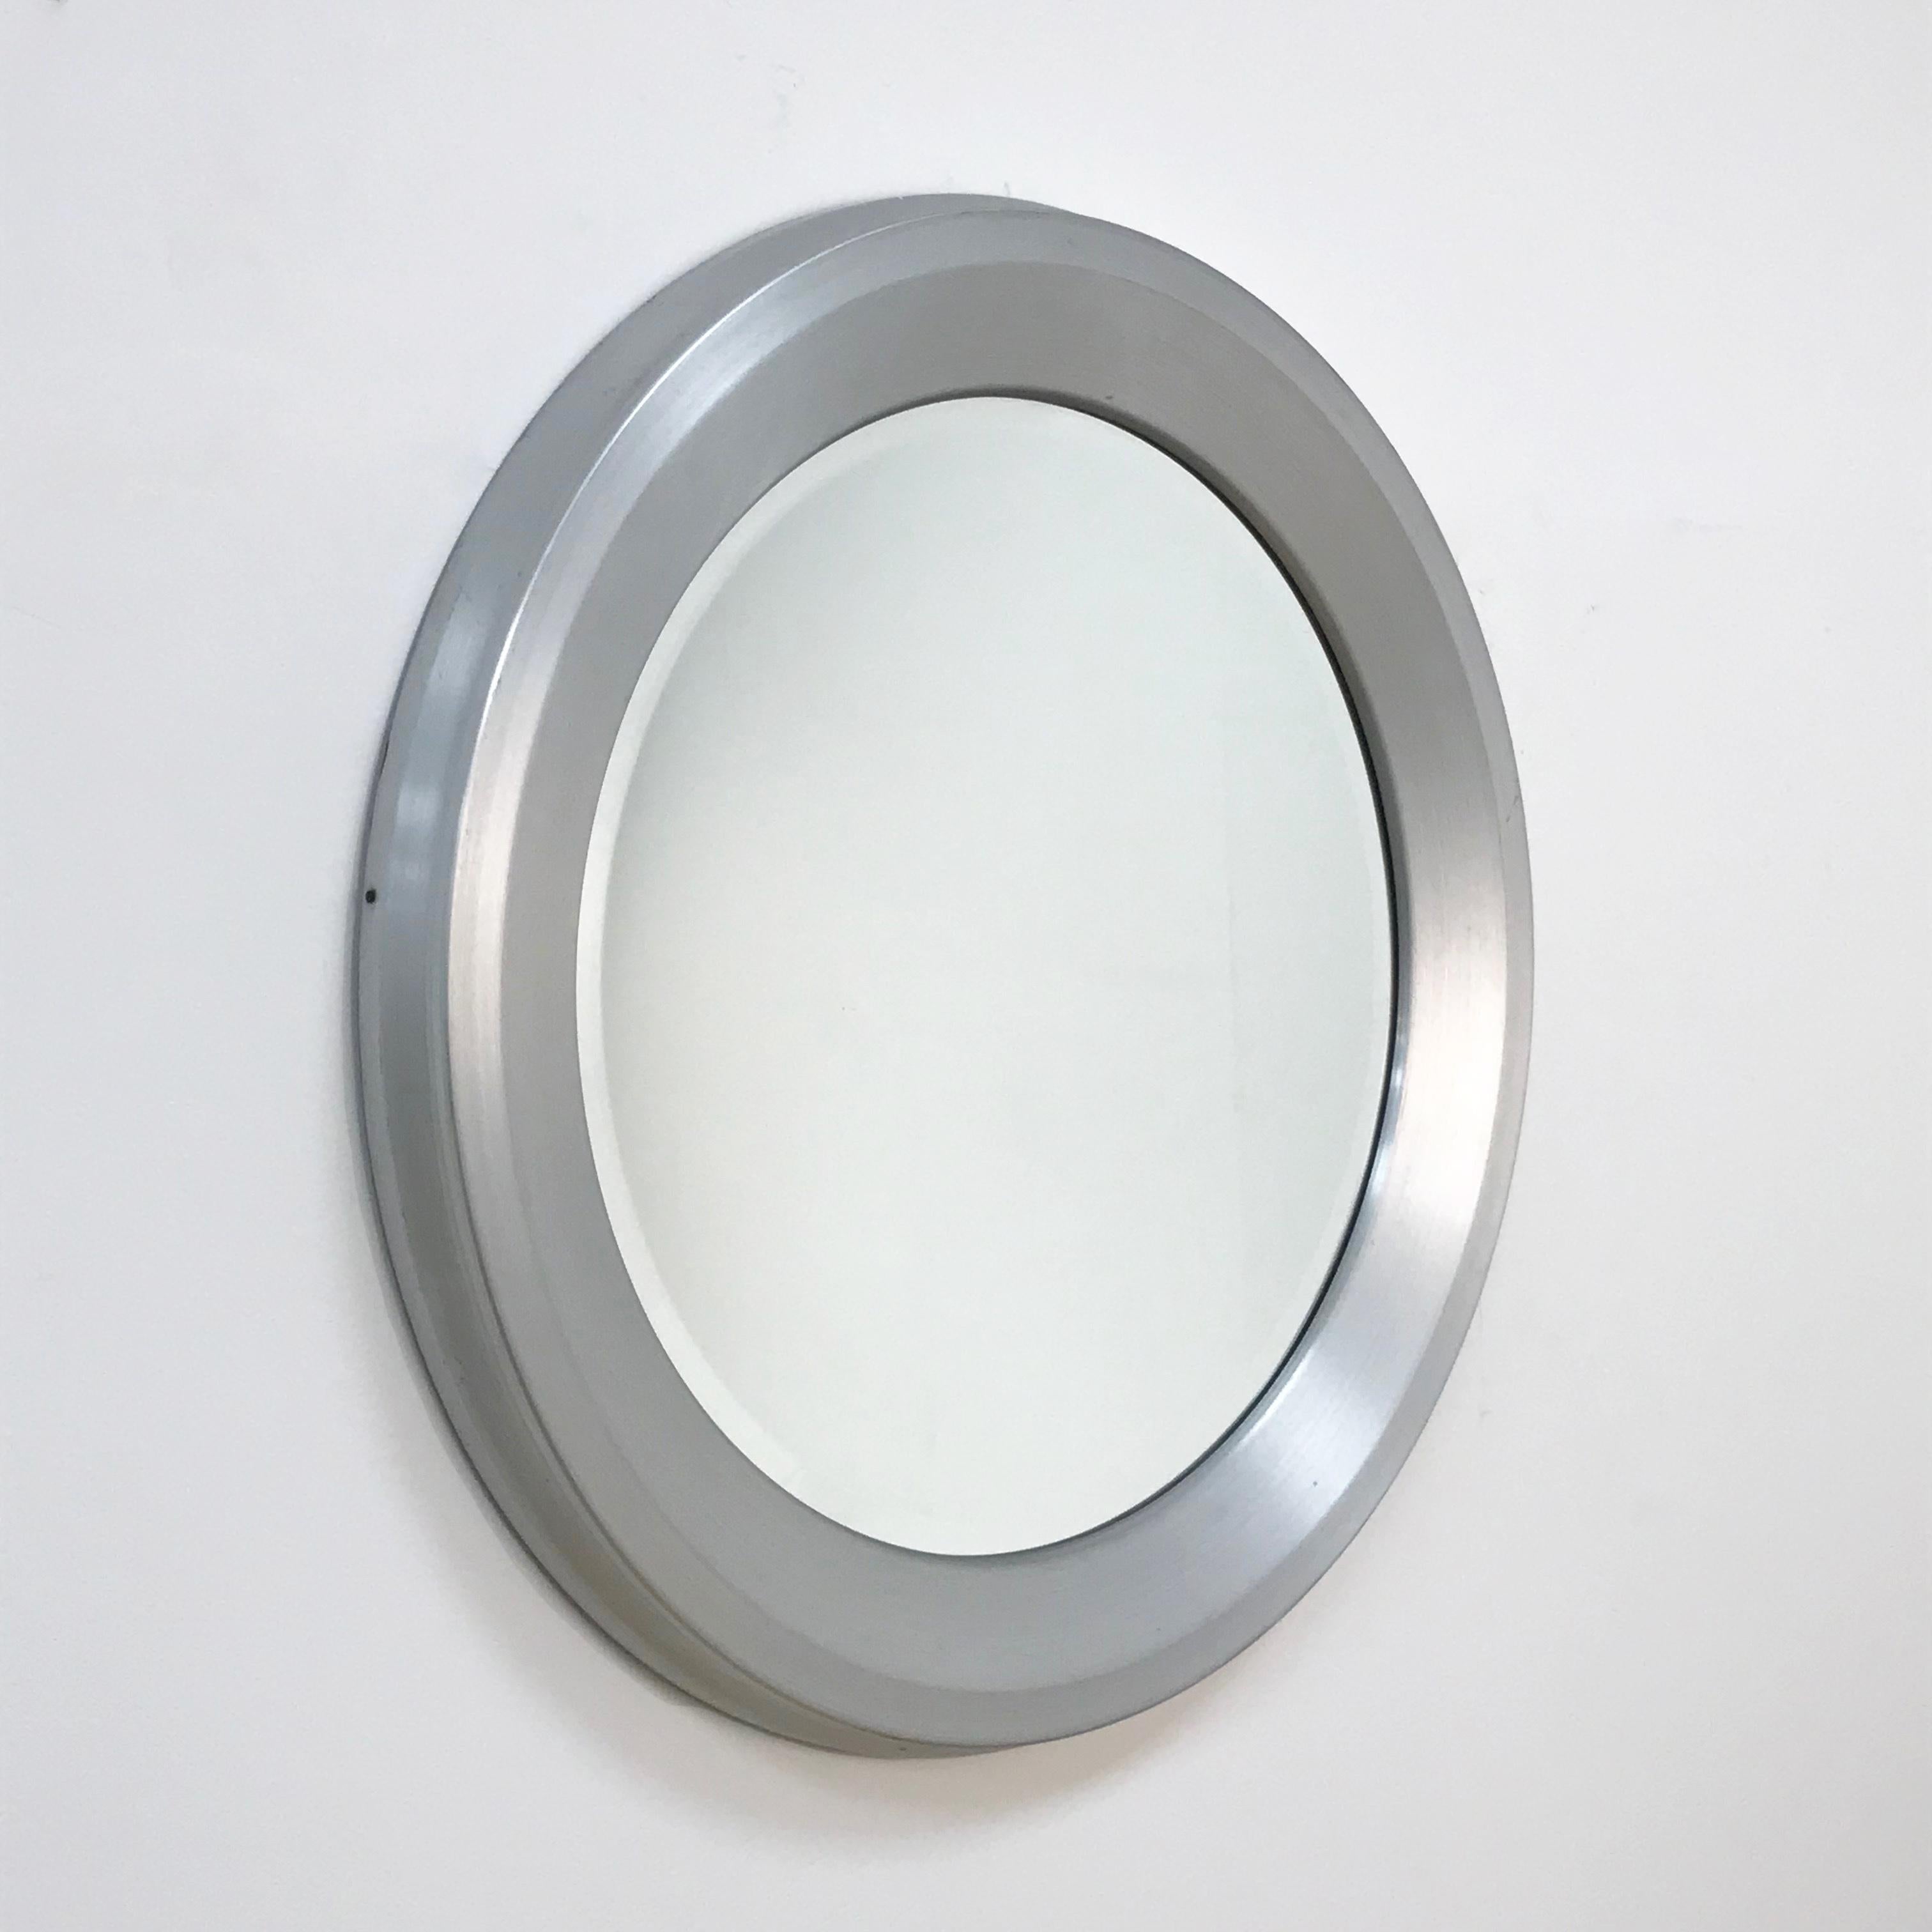 Round Beveled Mirror, Aluminum Frame, 1960s Midcentury, Italy, Artemide Style 1